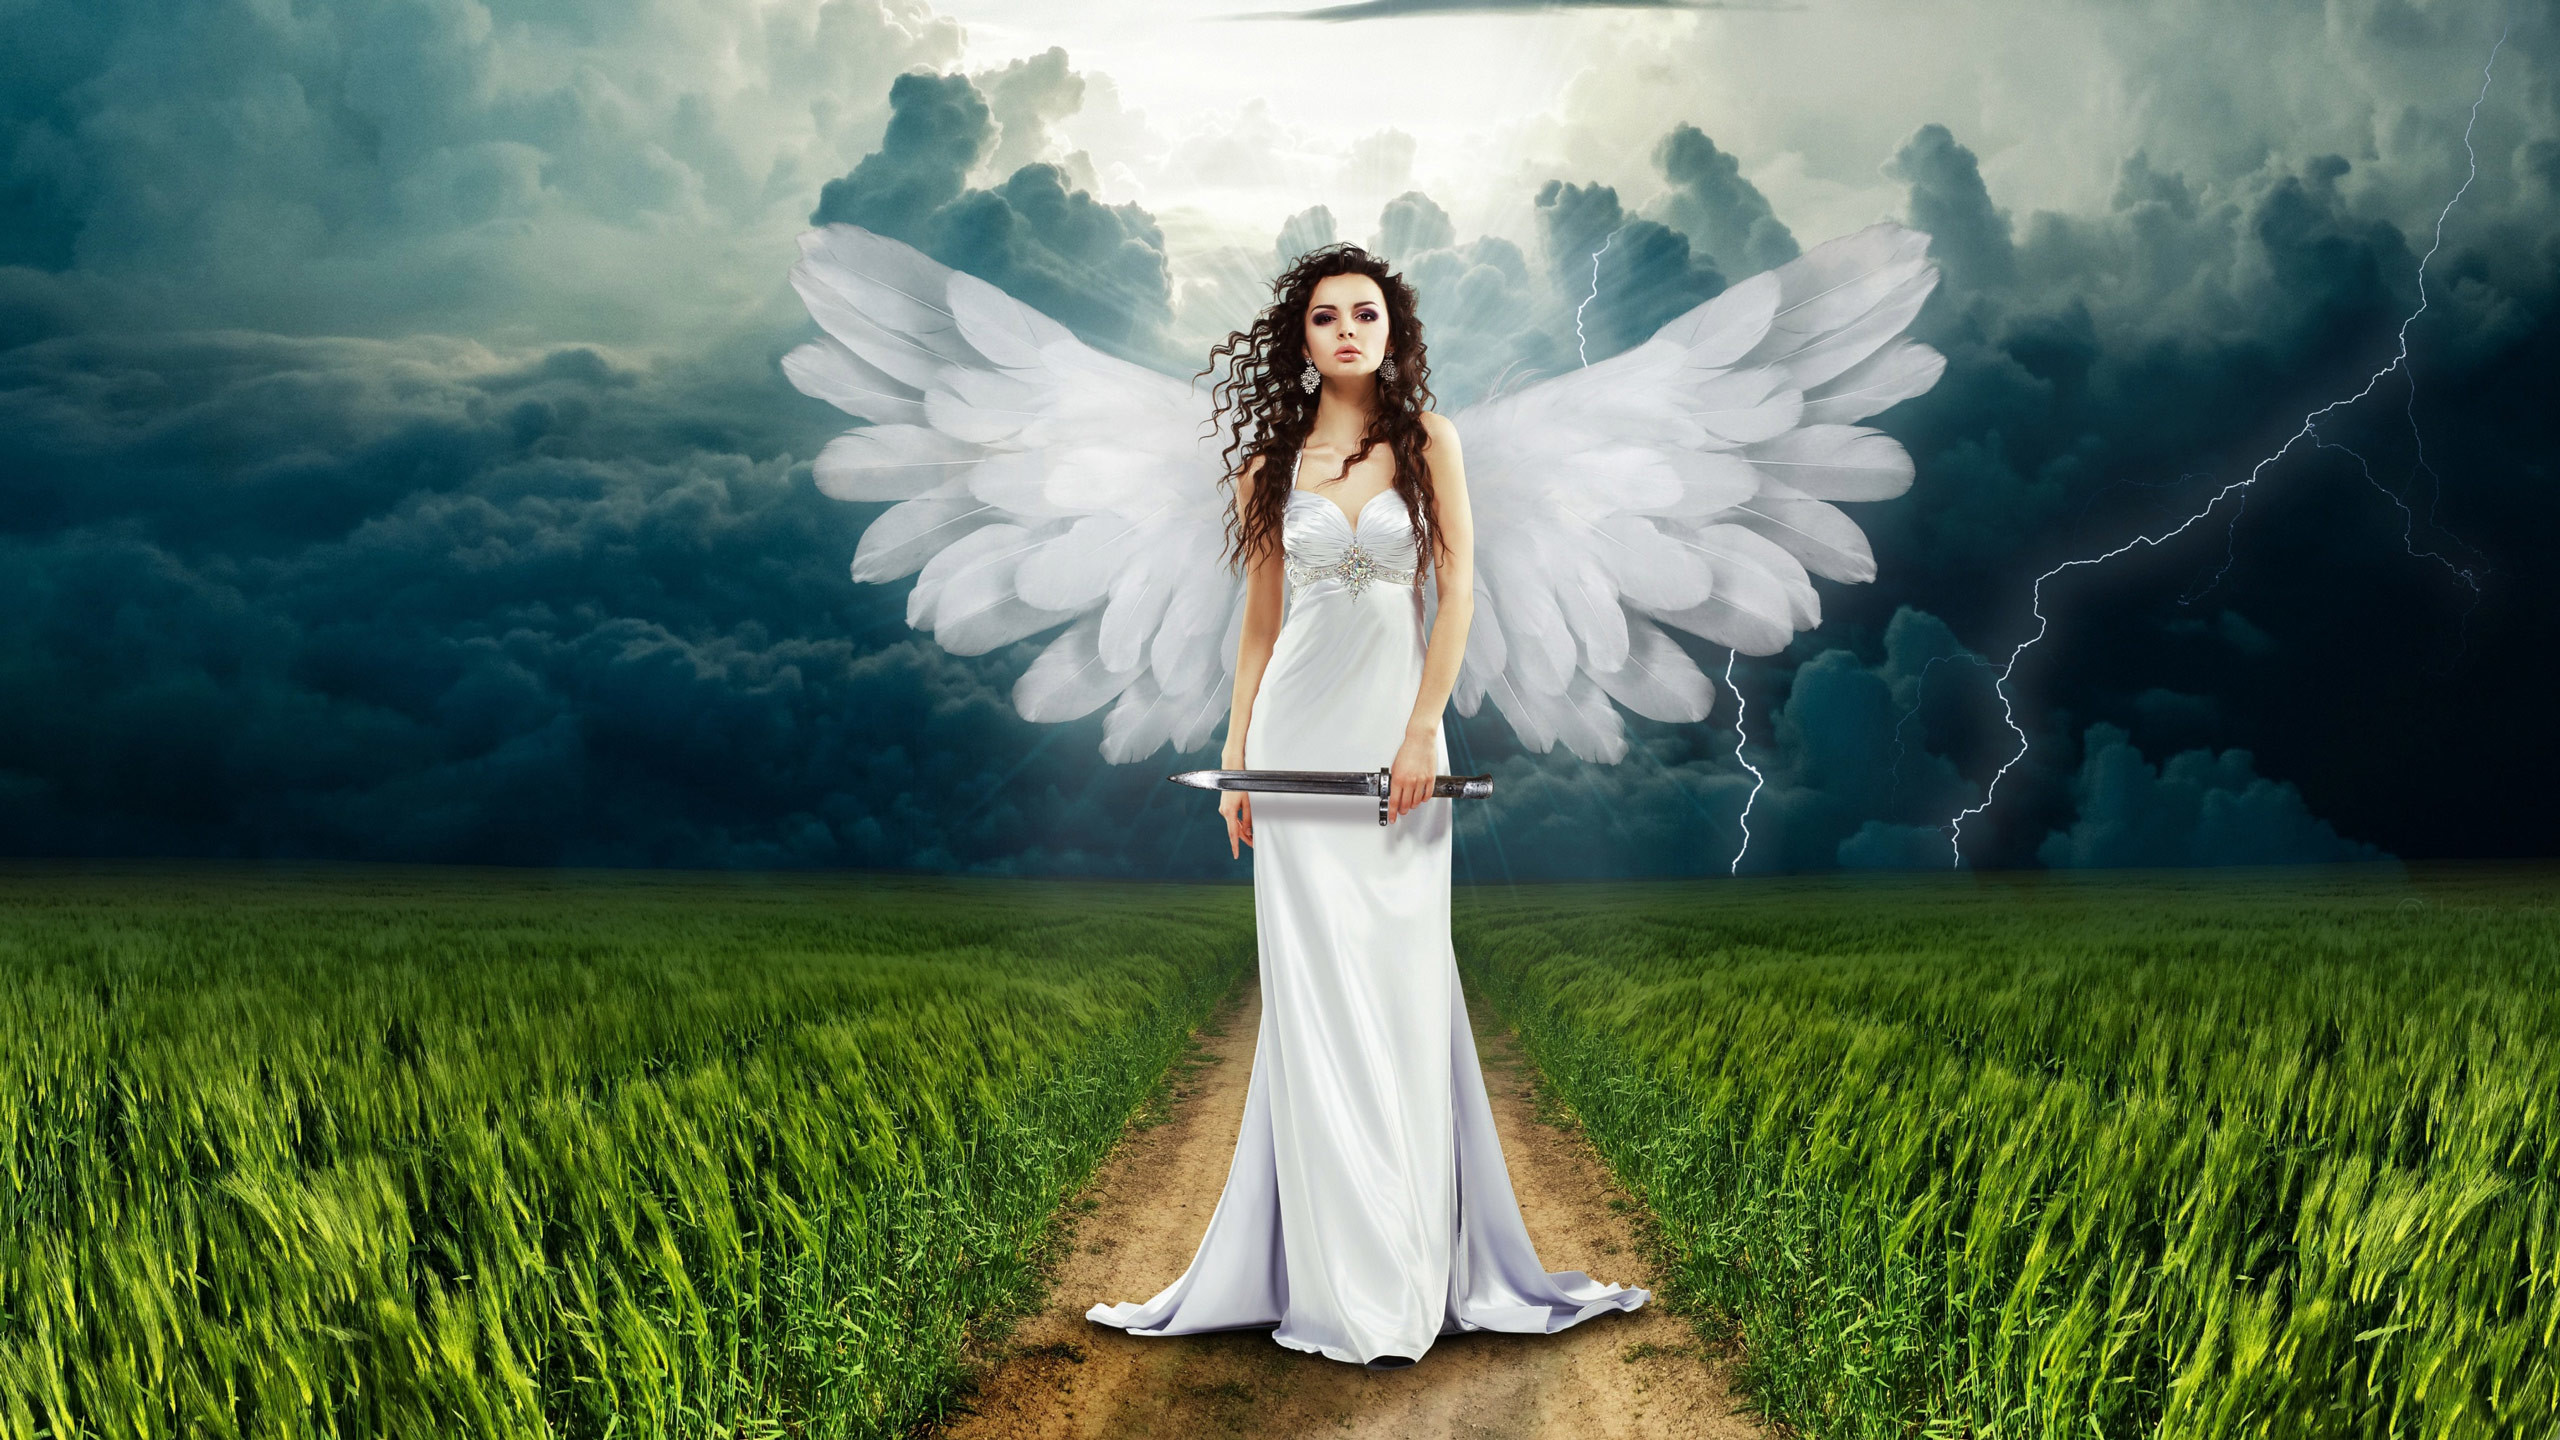 2560x1440 Free Beautiful Female Angel on Earth, Angel computer desktop hd widescreen  wallpapers, heaven pictures